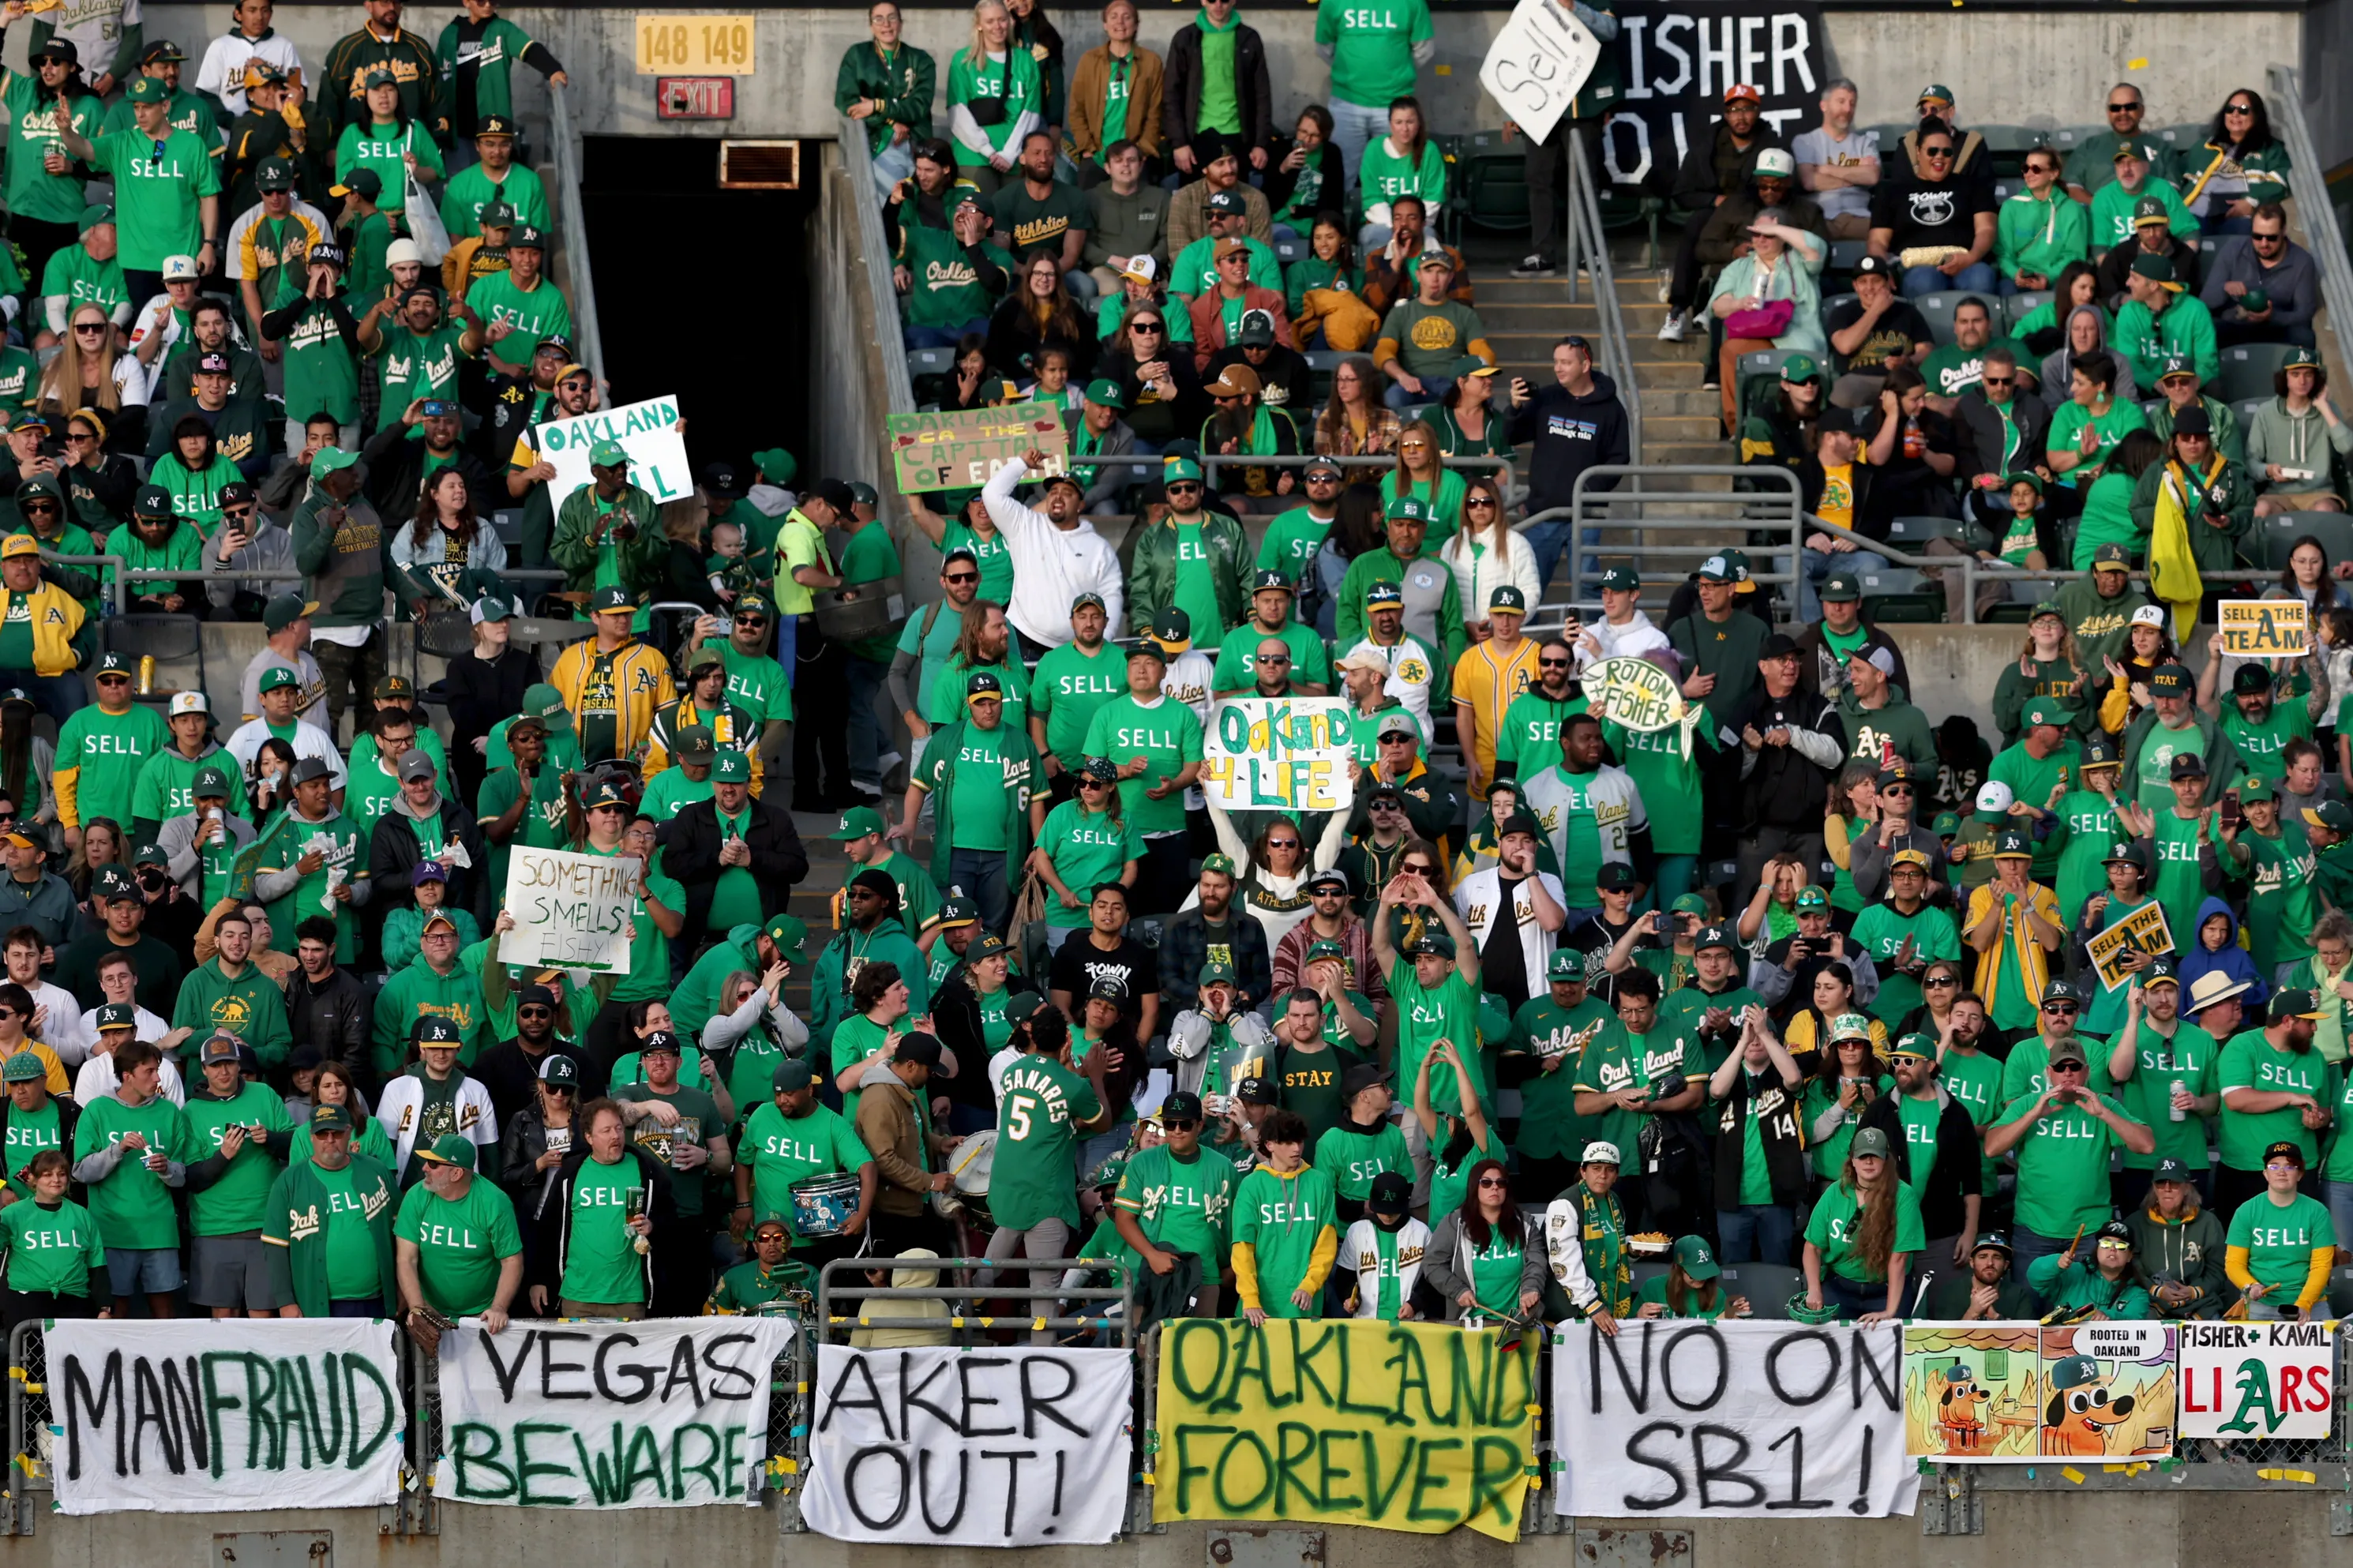 Reverse boycott at the Oakland Coliseum on June 13